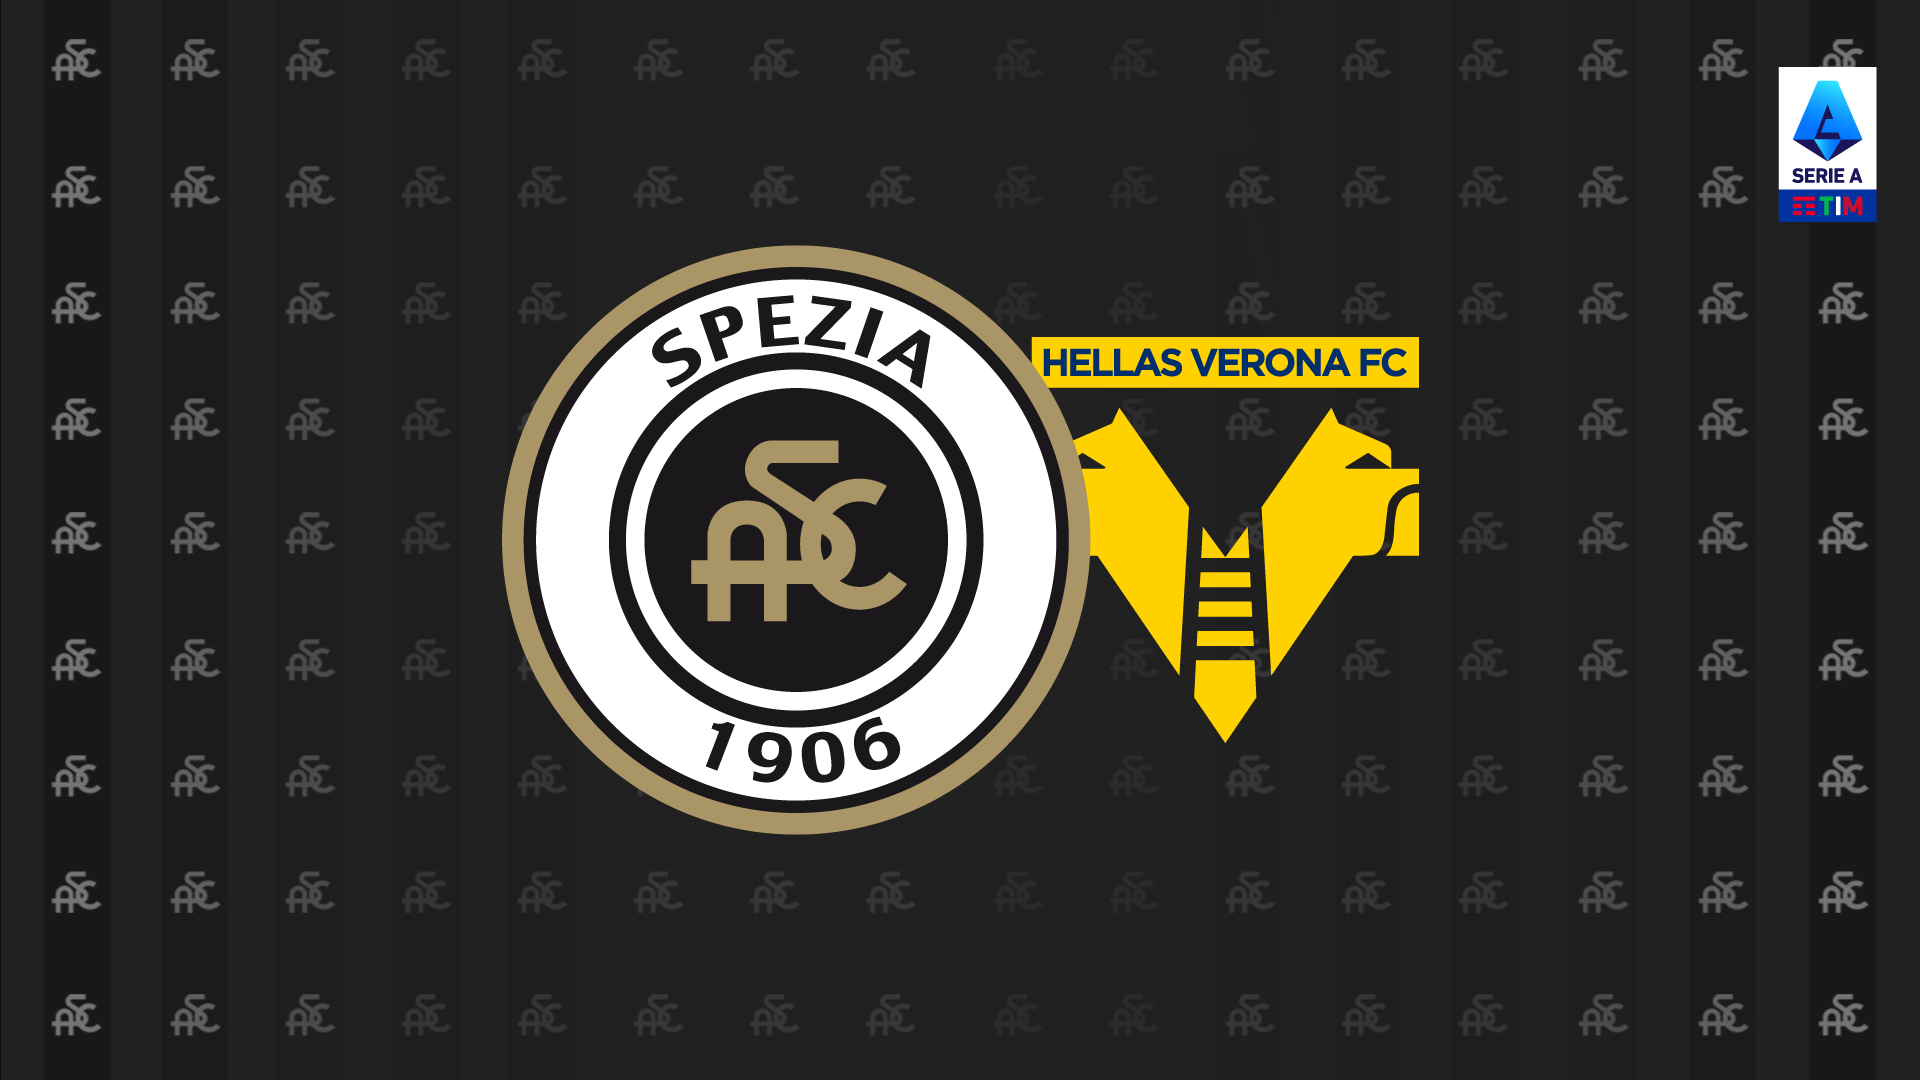 Spezia-Hellas Verona: free sale from Wednesday 29